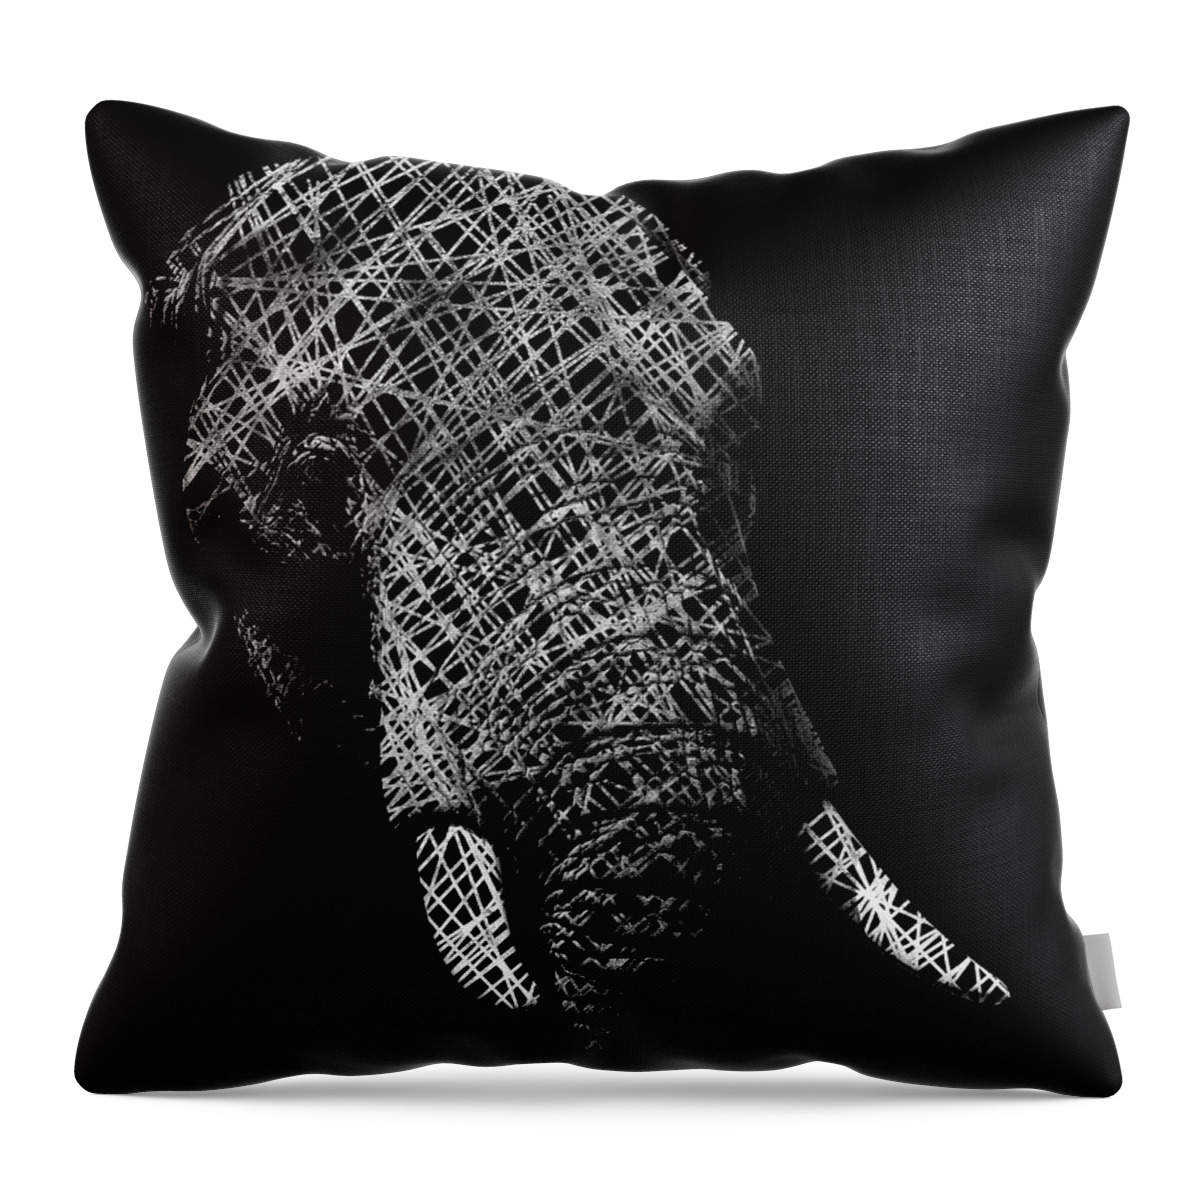 Logo Throw Pillow featuring the digital art Elephant Scribble by Pelo Blanco Photo